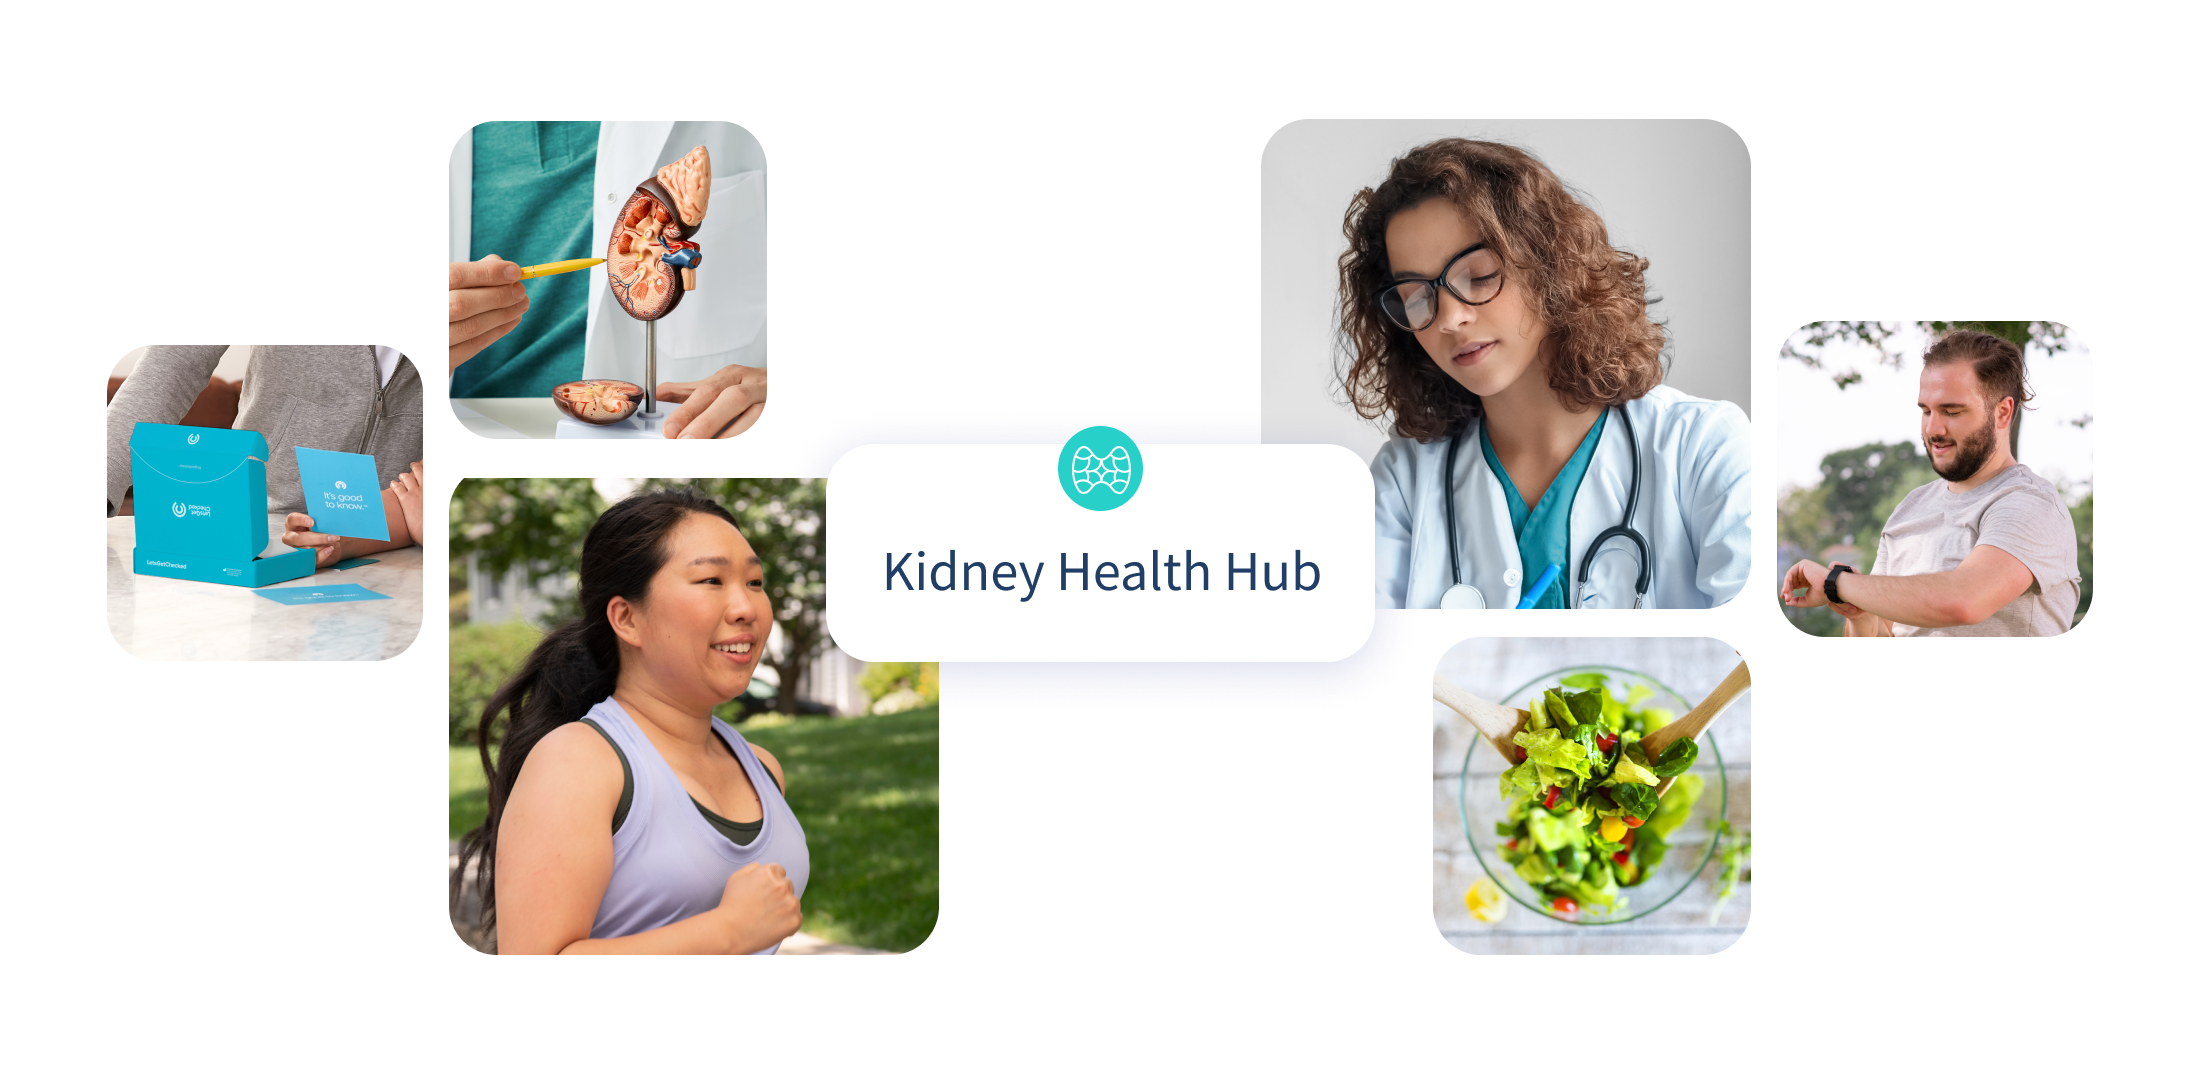 Kidney health hub header